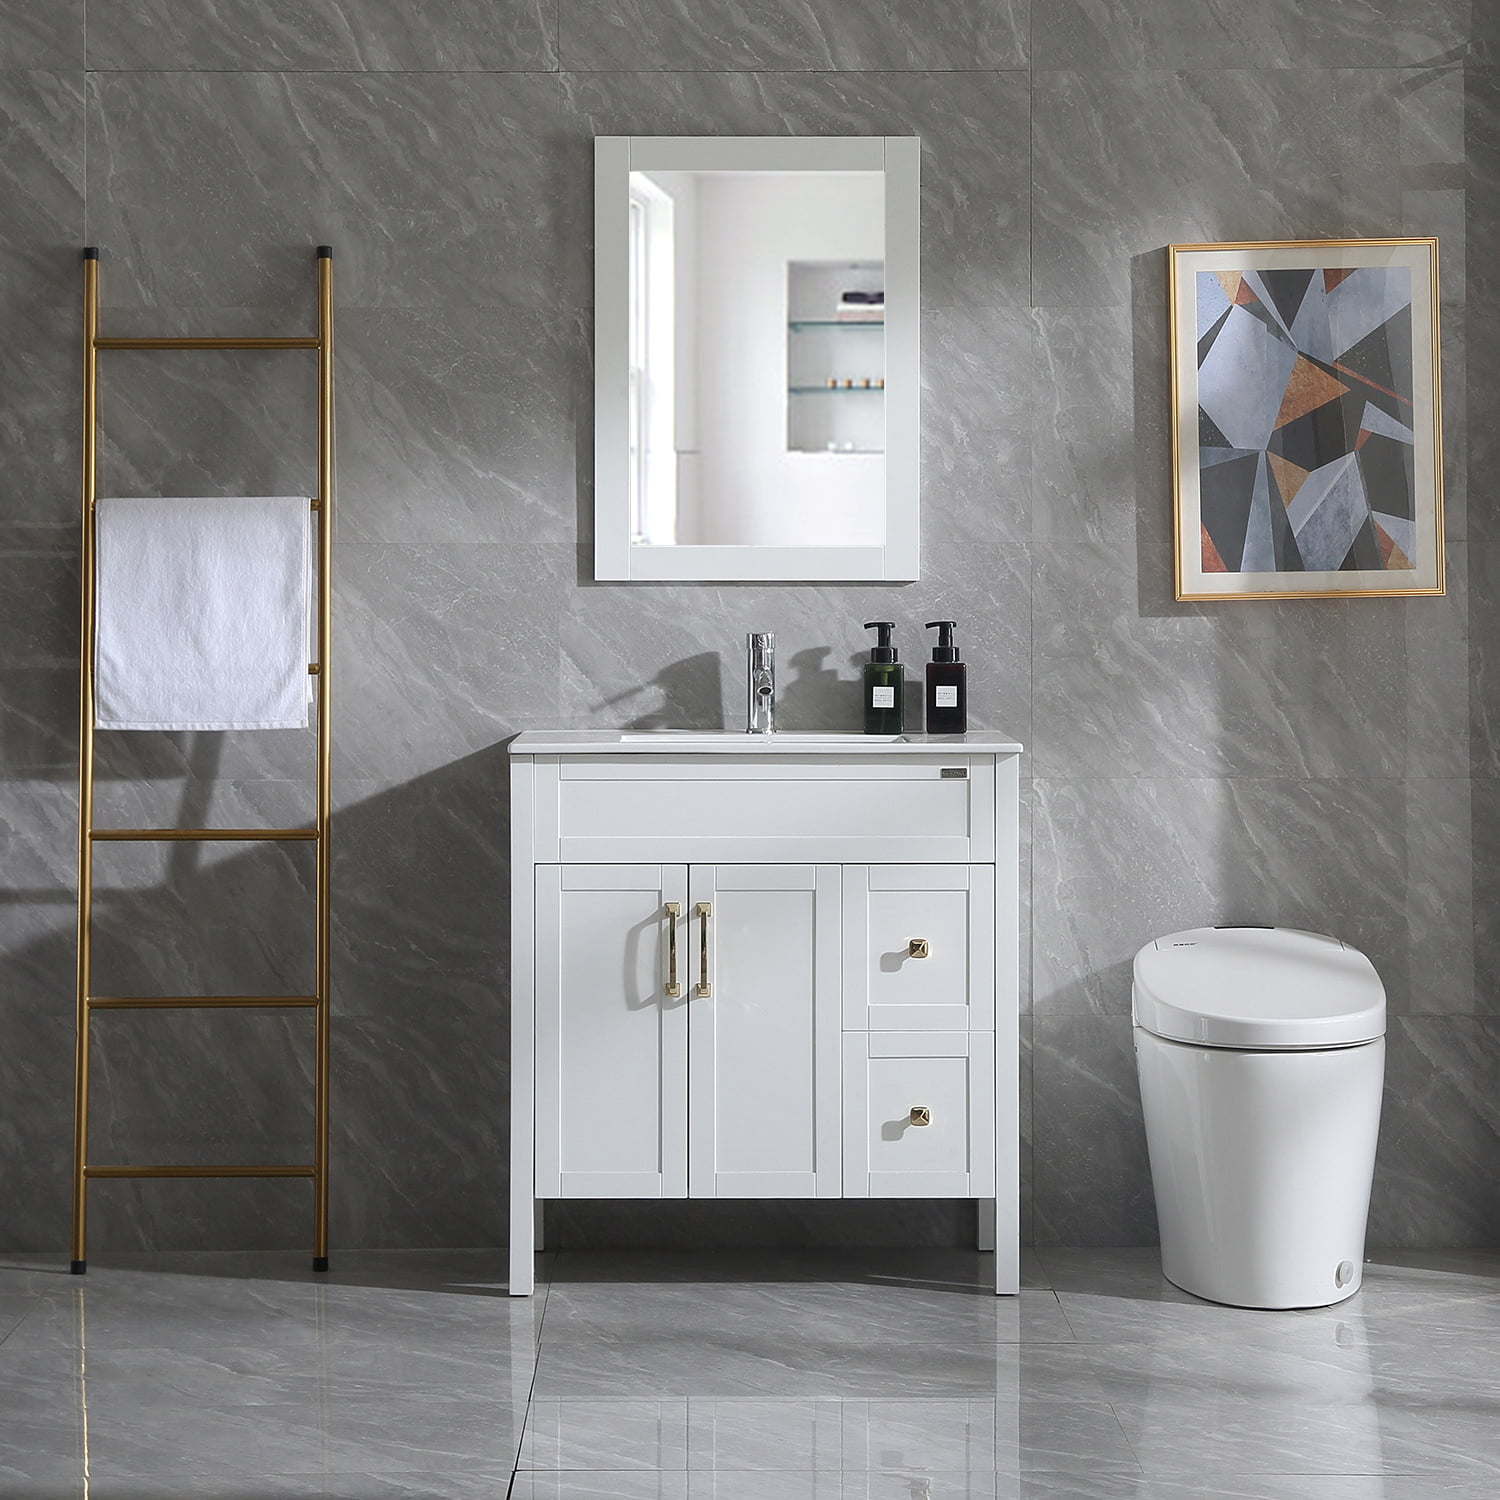 36" White Bathroom Vanity Mirror Side Cabinet Vessel Glass/Ceramic Sink Faucet 